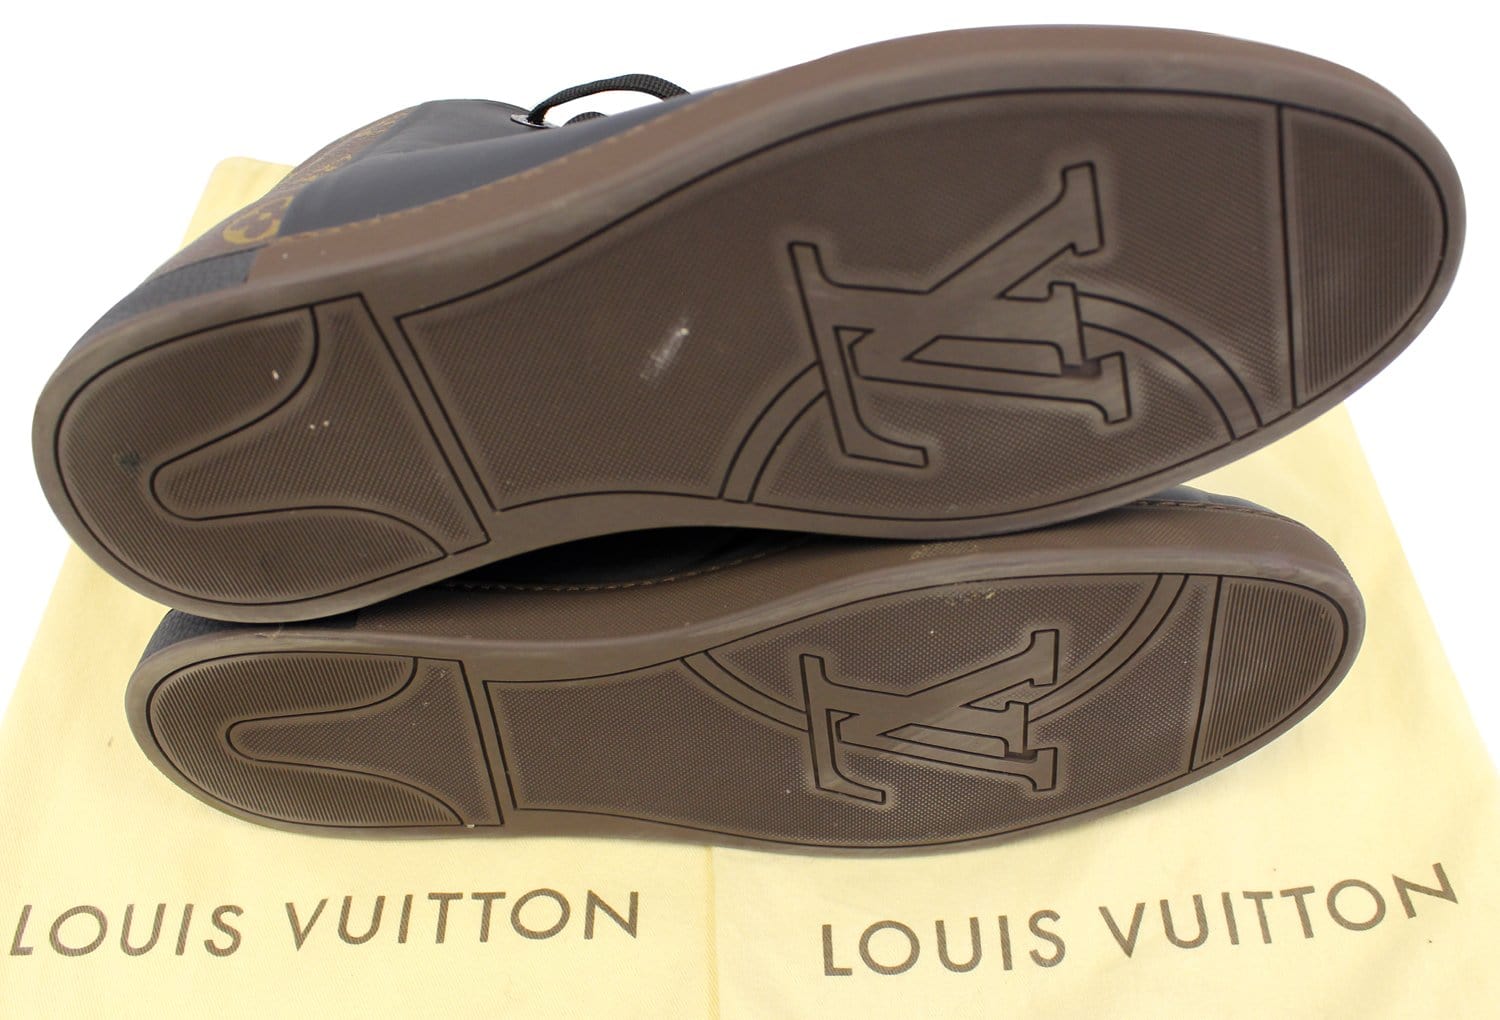 Shoe Collector on Instagram: ✨🧳 @louisvuitton Alphabet trunks